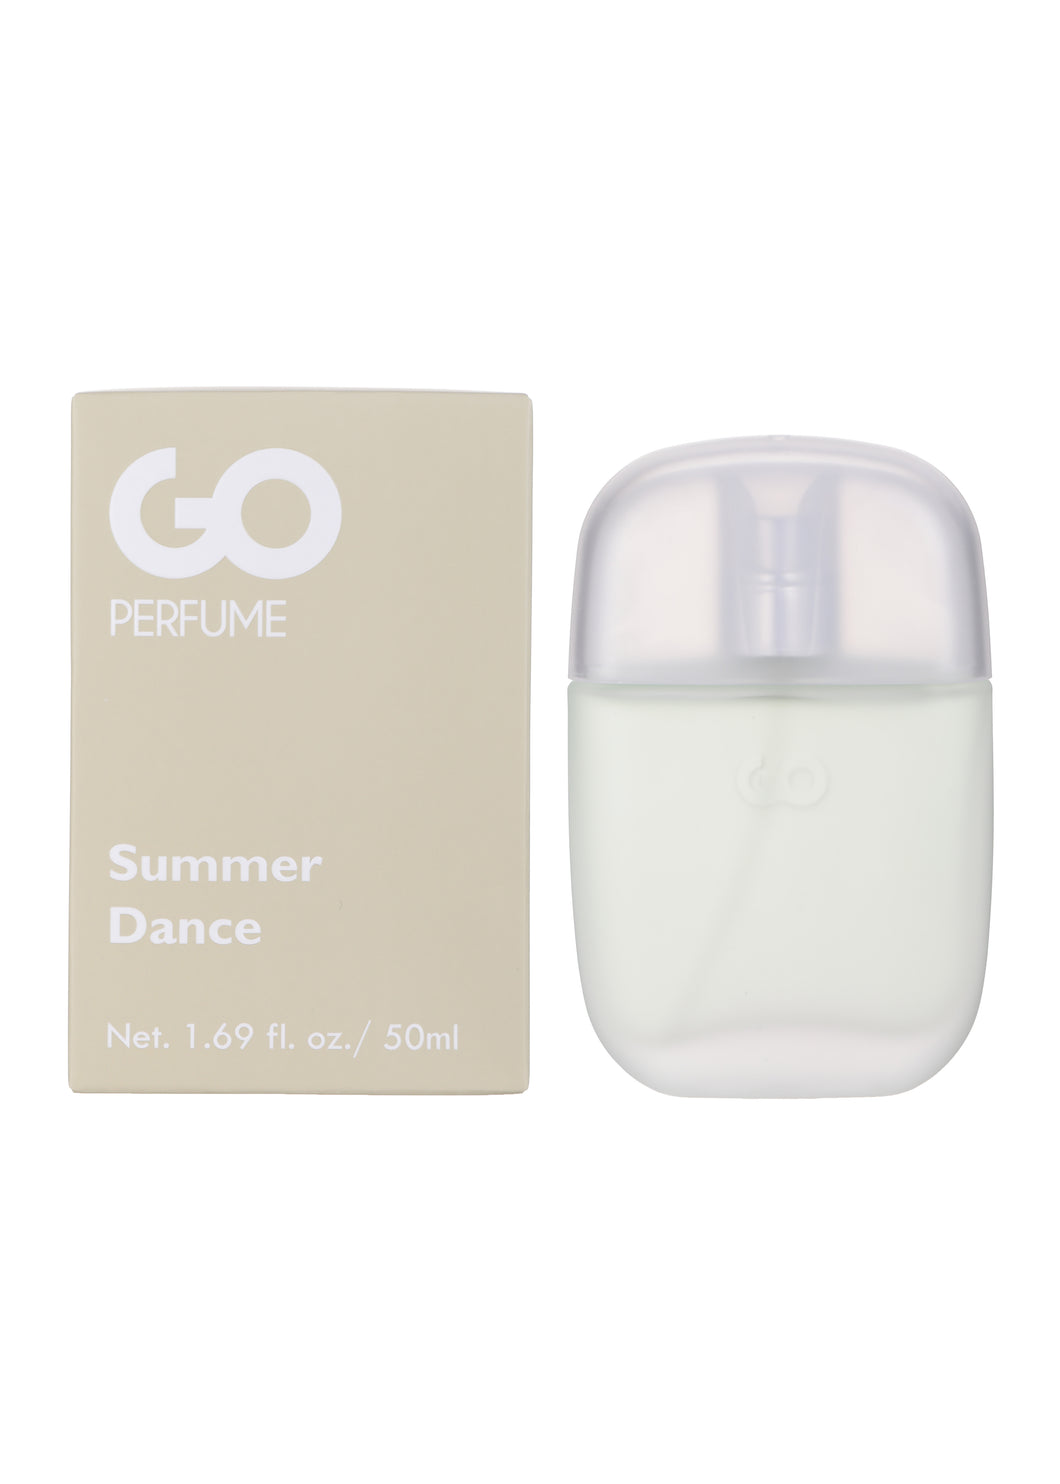 GO Perfume 50ml Summer Dance